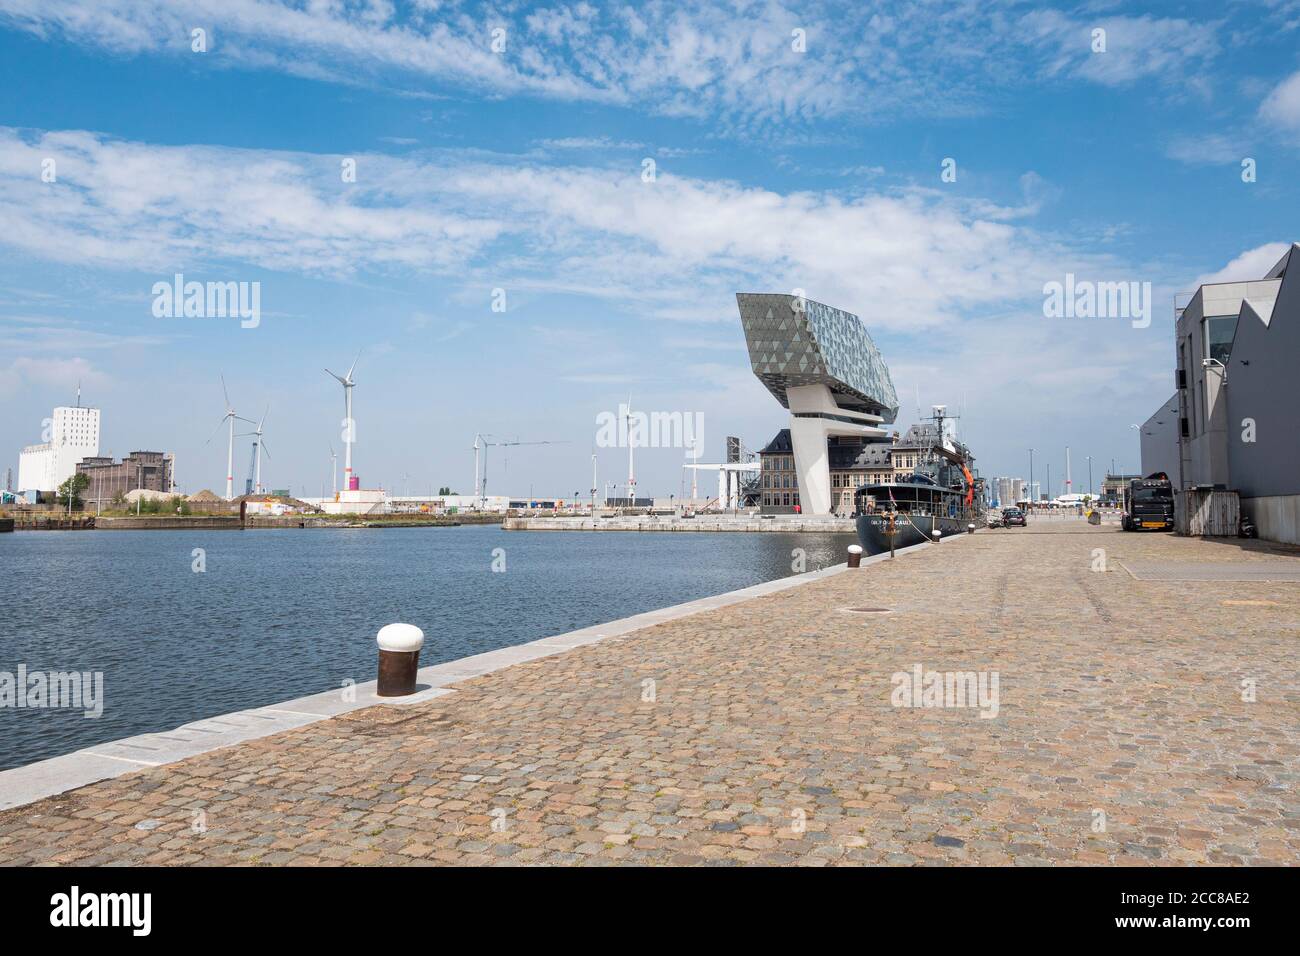 Anversa, Belgio, 19 luglio 2020, la banchina del Kattendijkdok con vista sul porto di Anversa Foto Stock